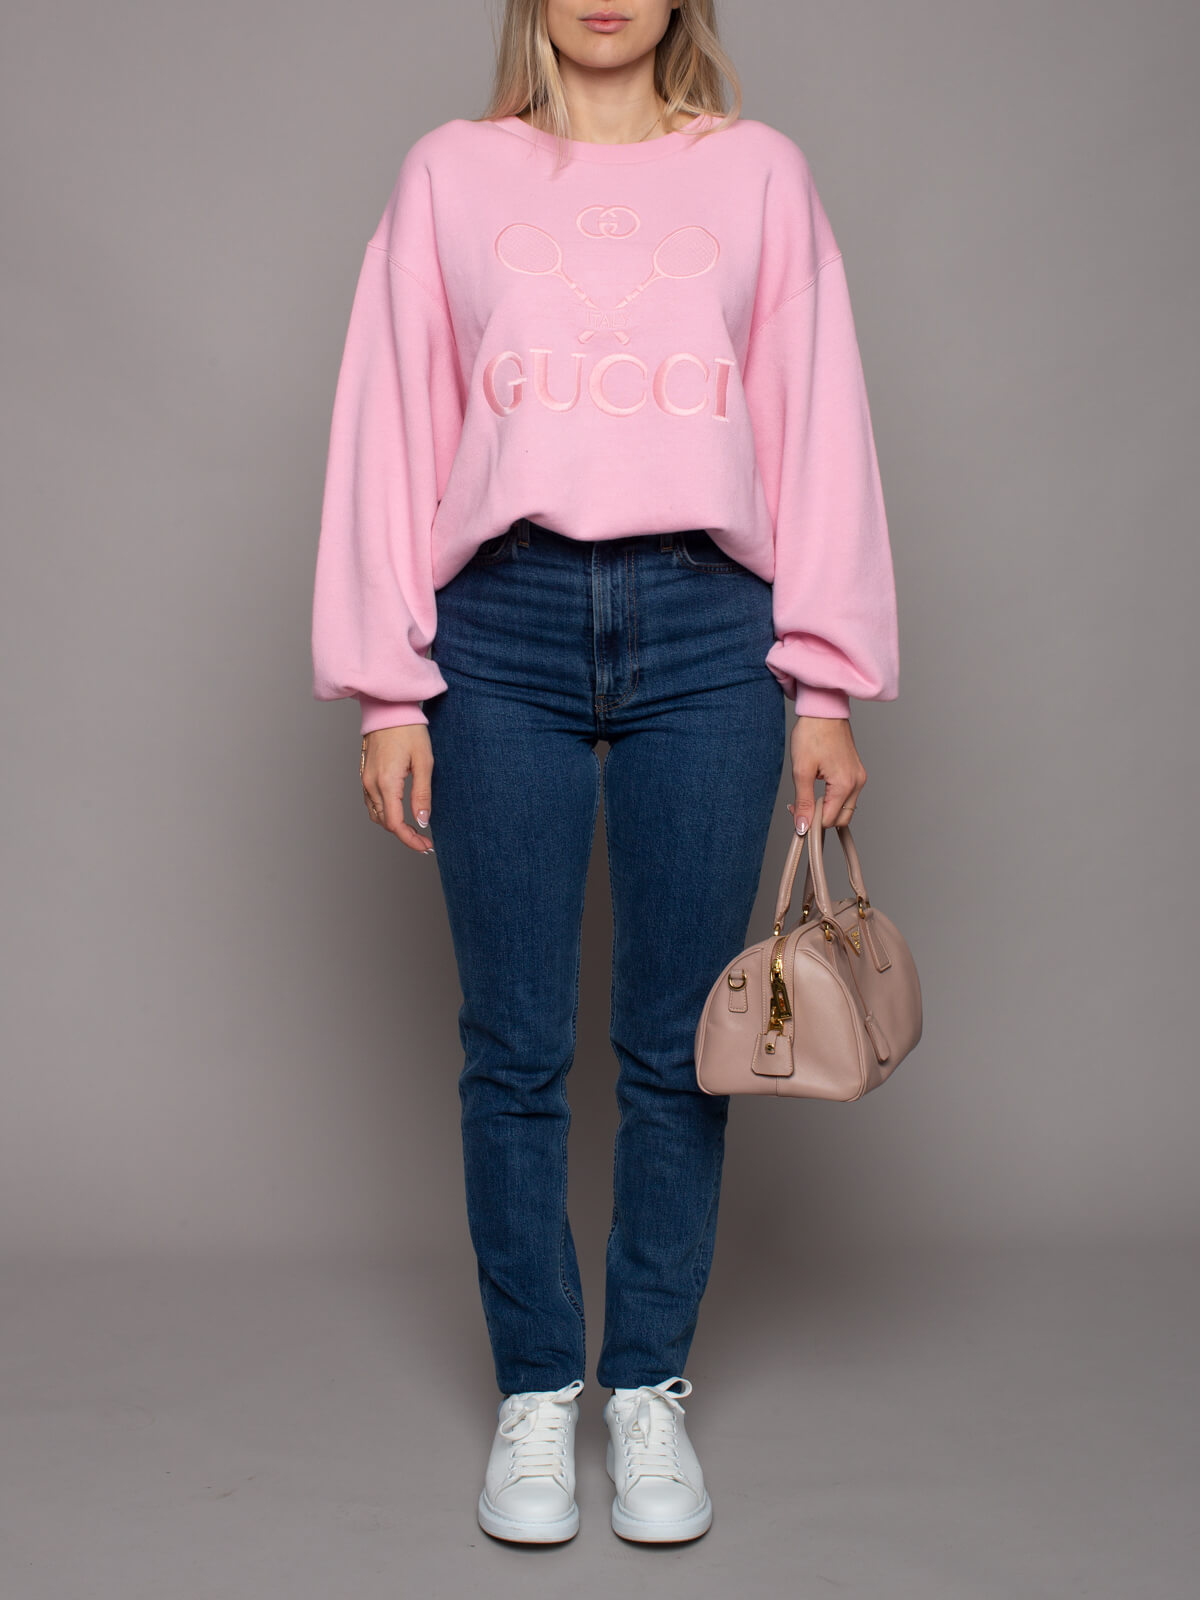 Gucci Women's Tennis Sweatshirt, Size 6 UK, Pink Cotton